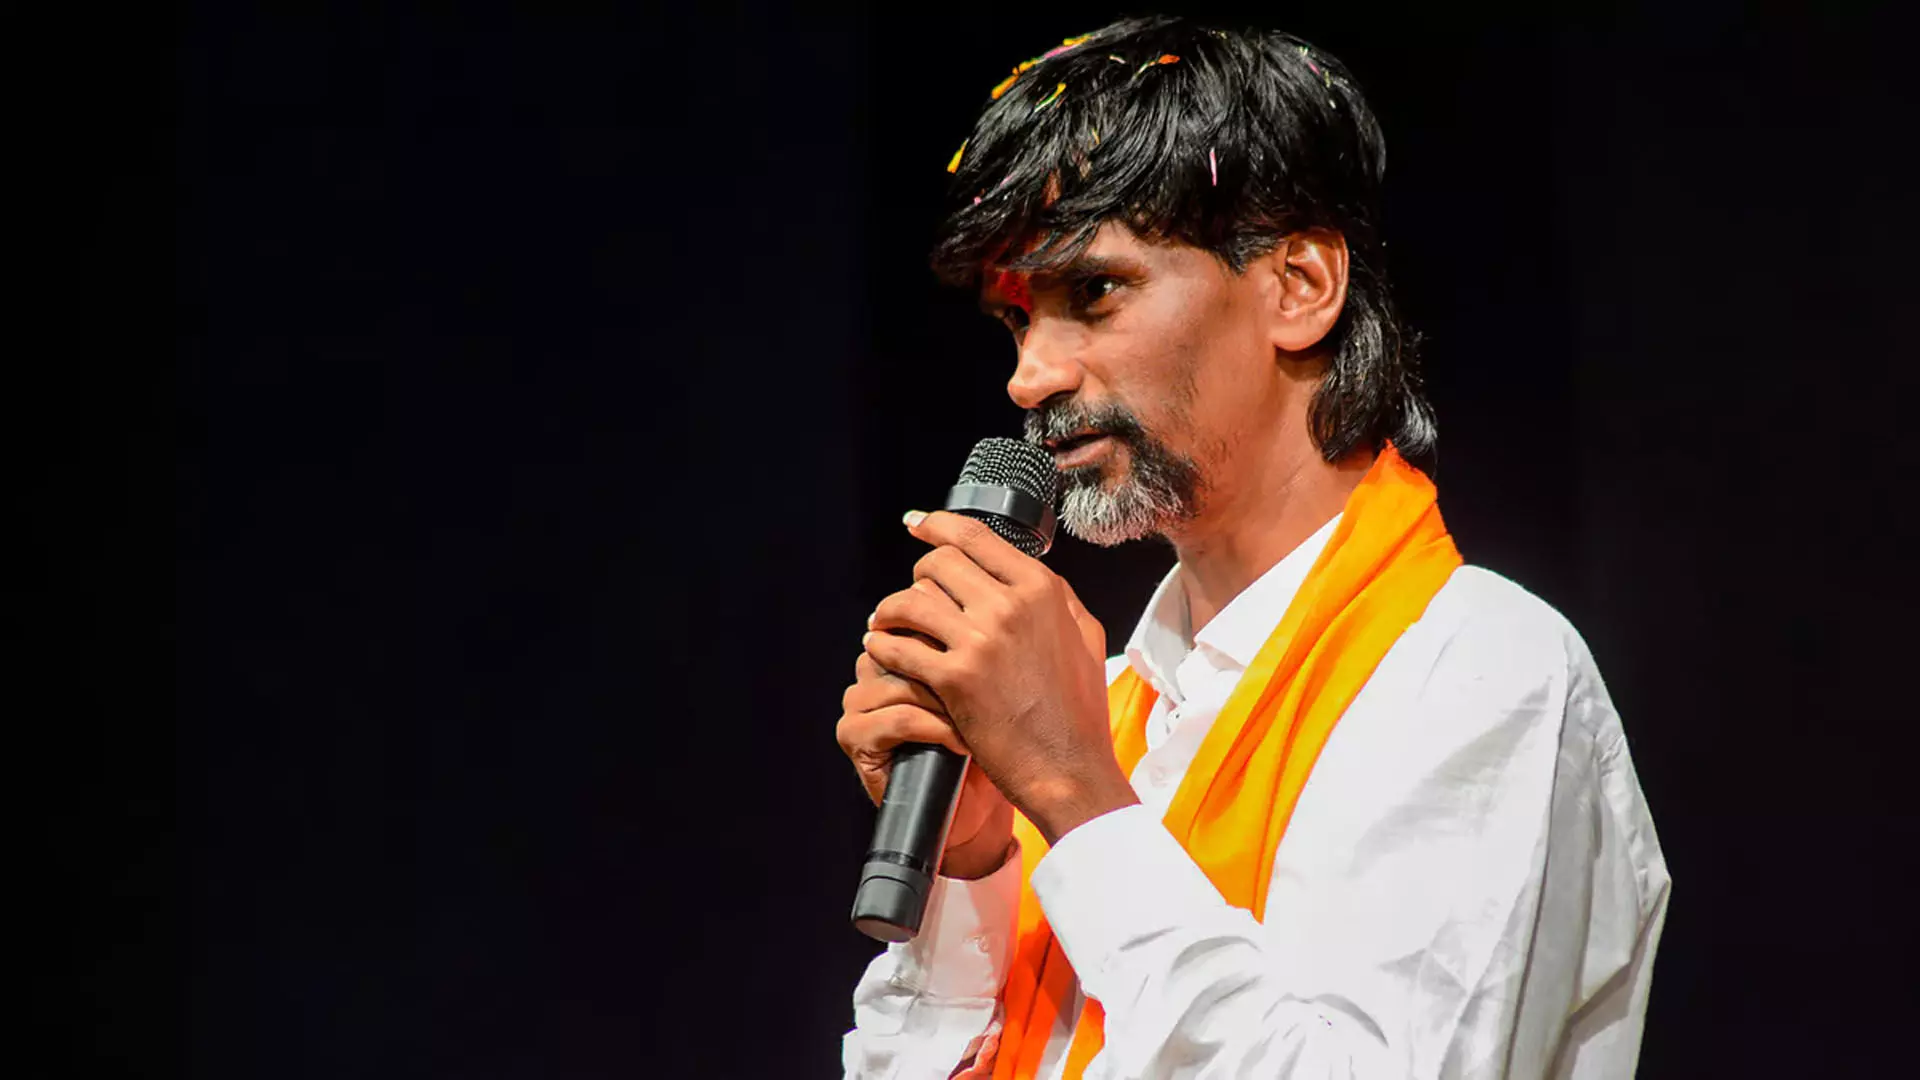 Maratha आरक्षण कार्यकर्ता मनोज जरांगे पाटिल ने कहा, अकेले लड़ रहा हूं लड़ाई